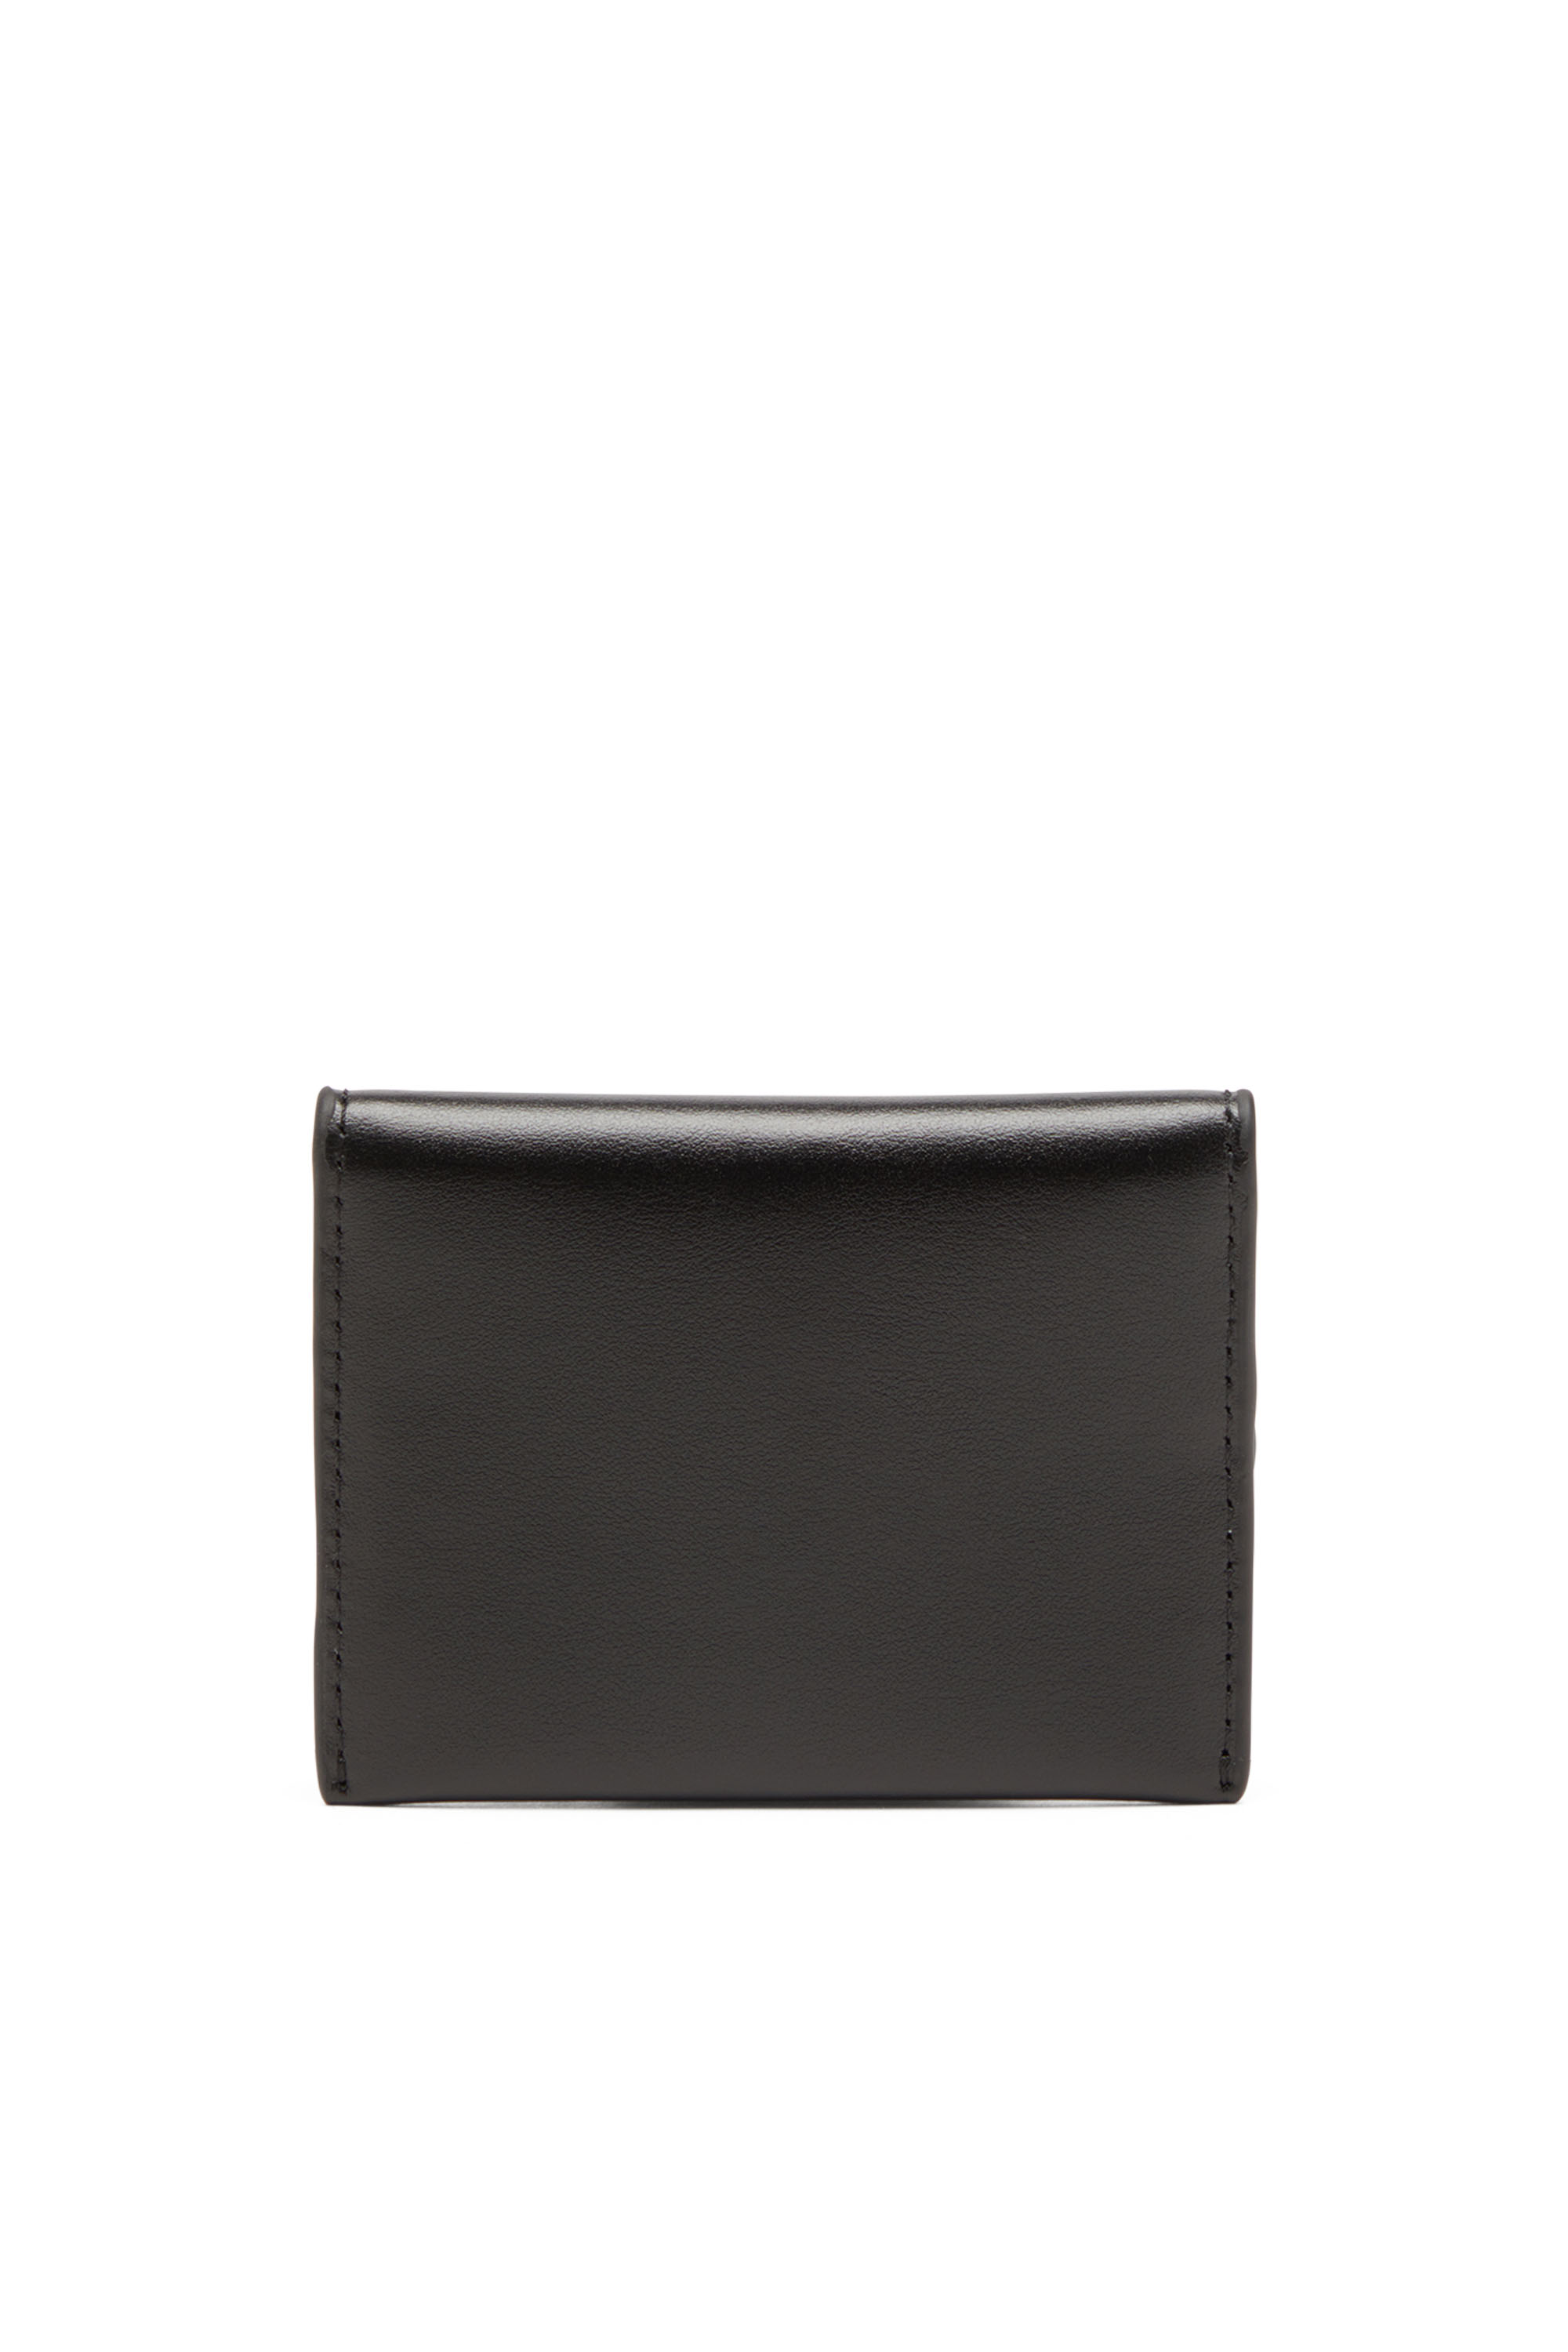 Diesel - HOLI-D CARD HOLDER S, Unisex Bi-fold card holder in smooth leather in Black - Image 3